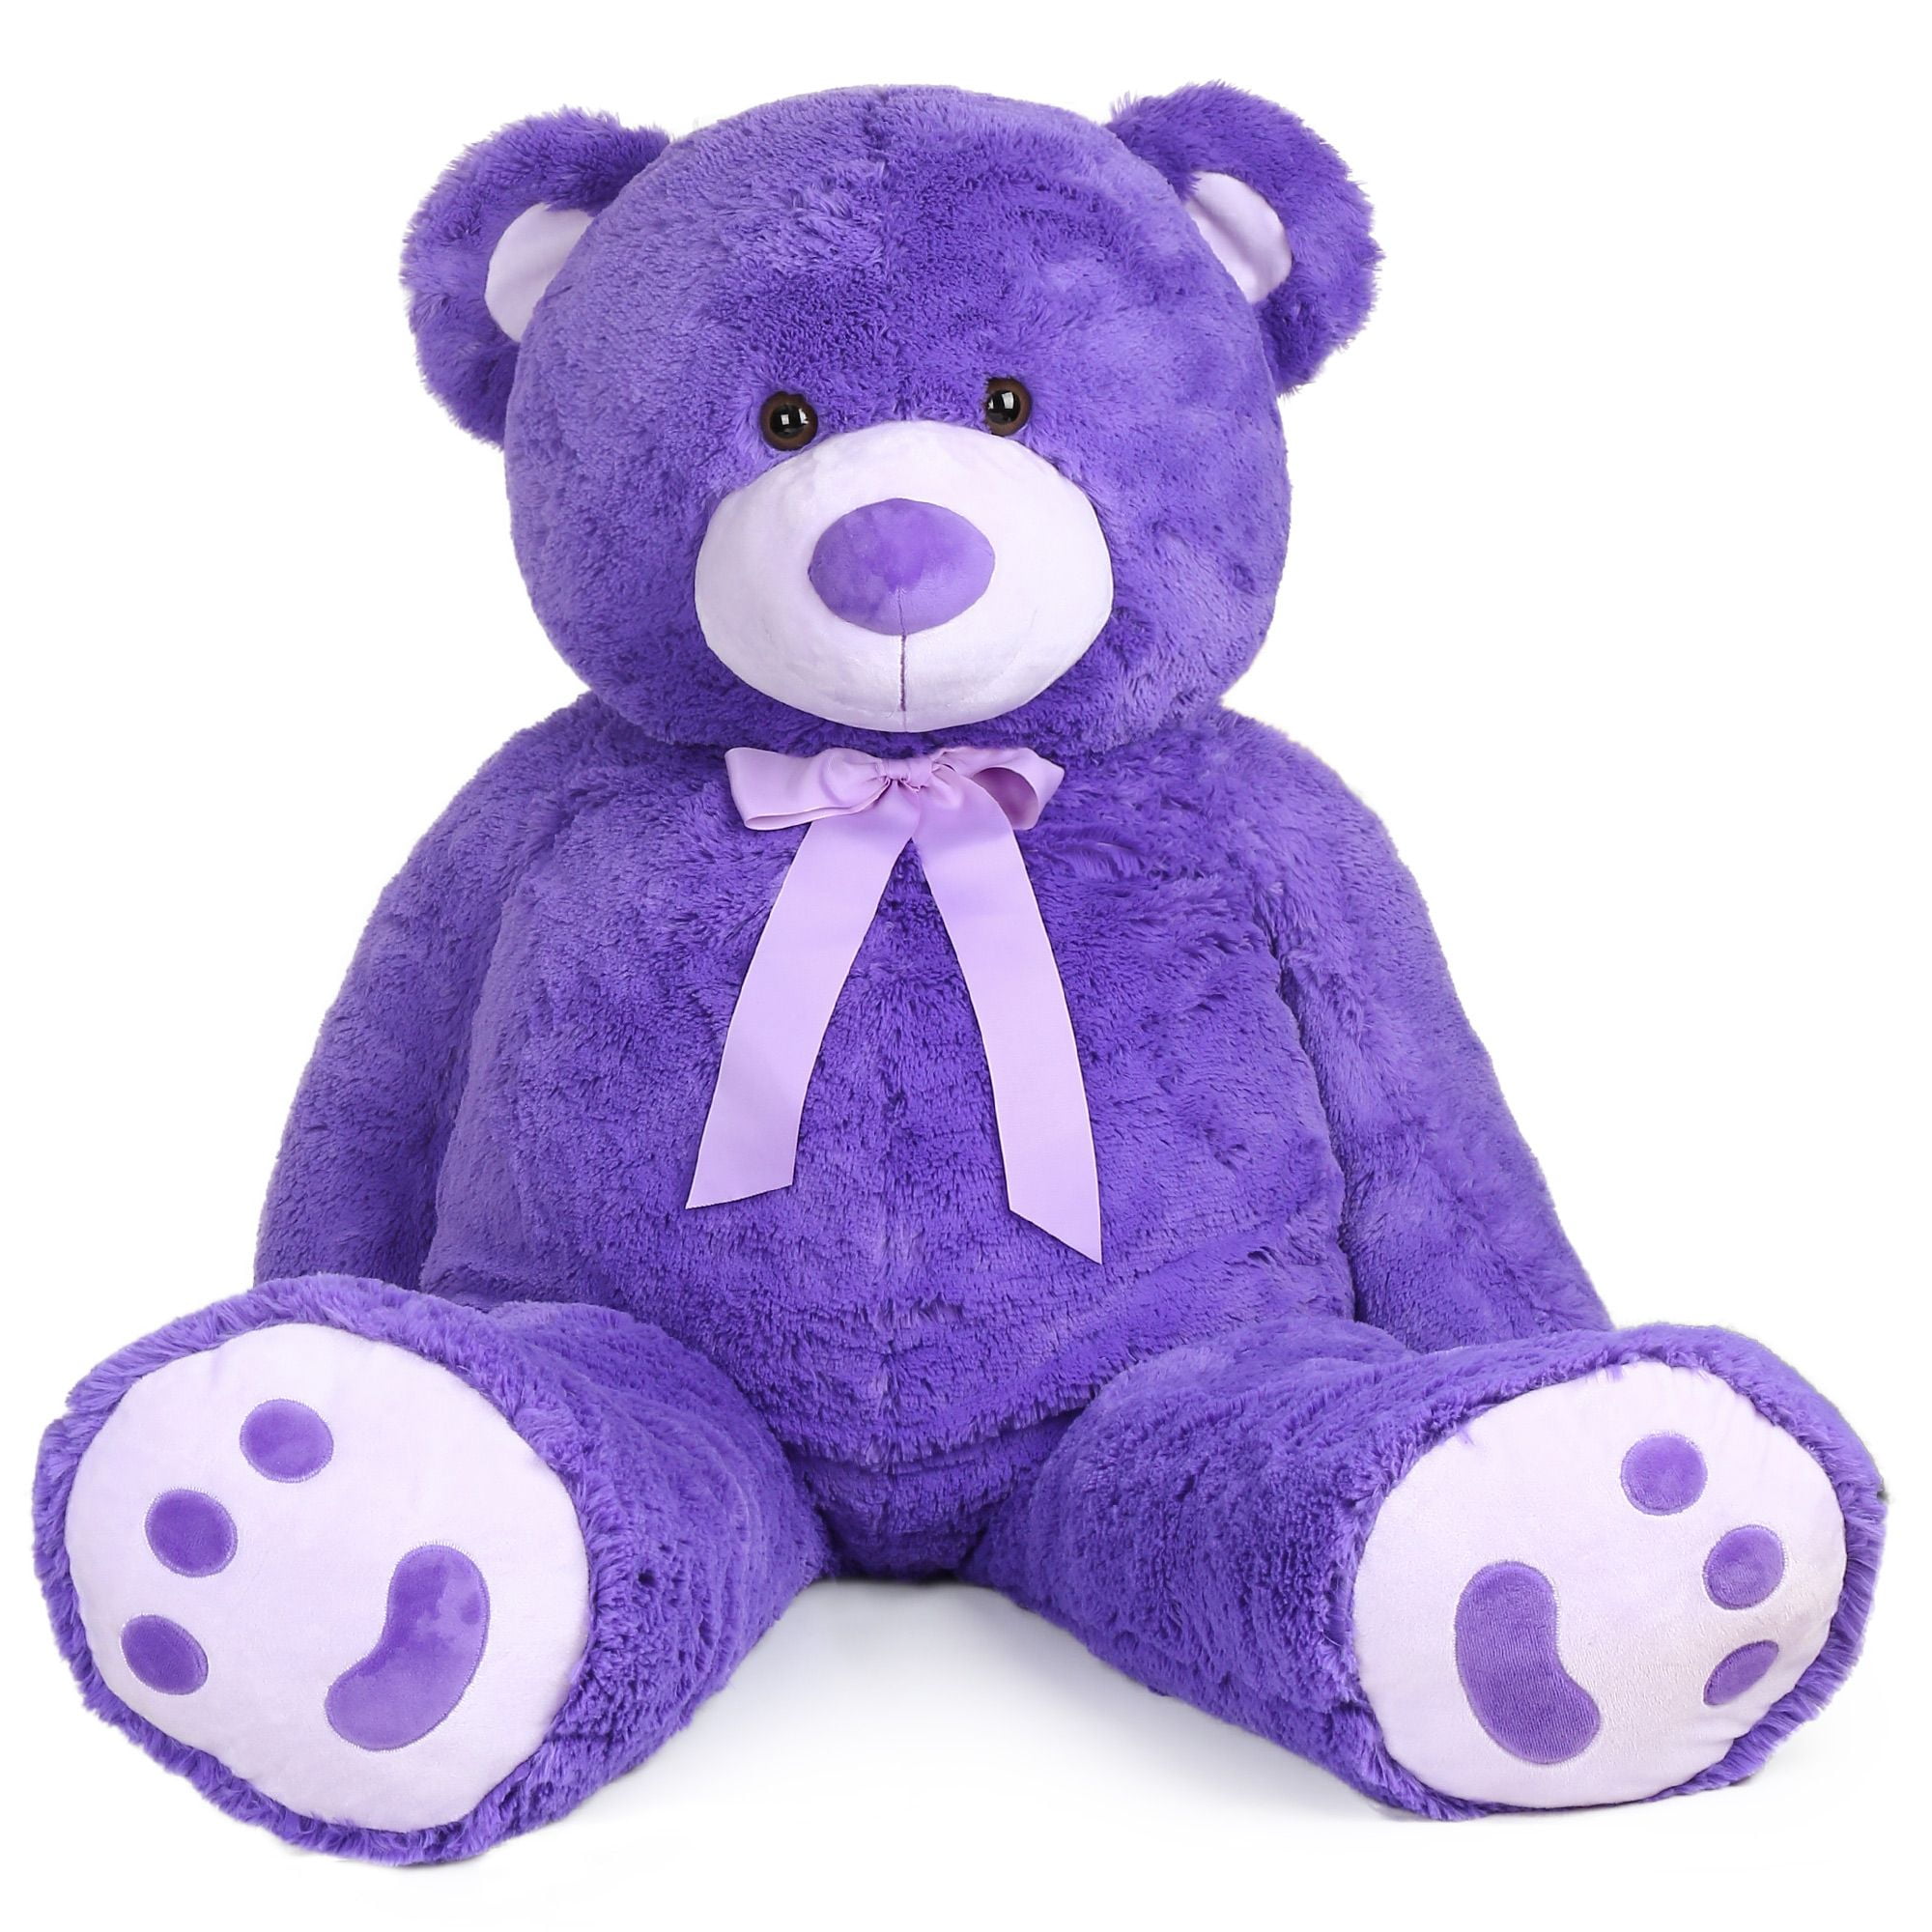 Lotsa Love Teddy Bear Plush Stuffed Animal W/ purple bow Approx 7" NWT 